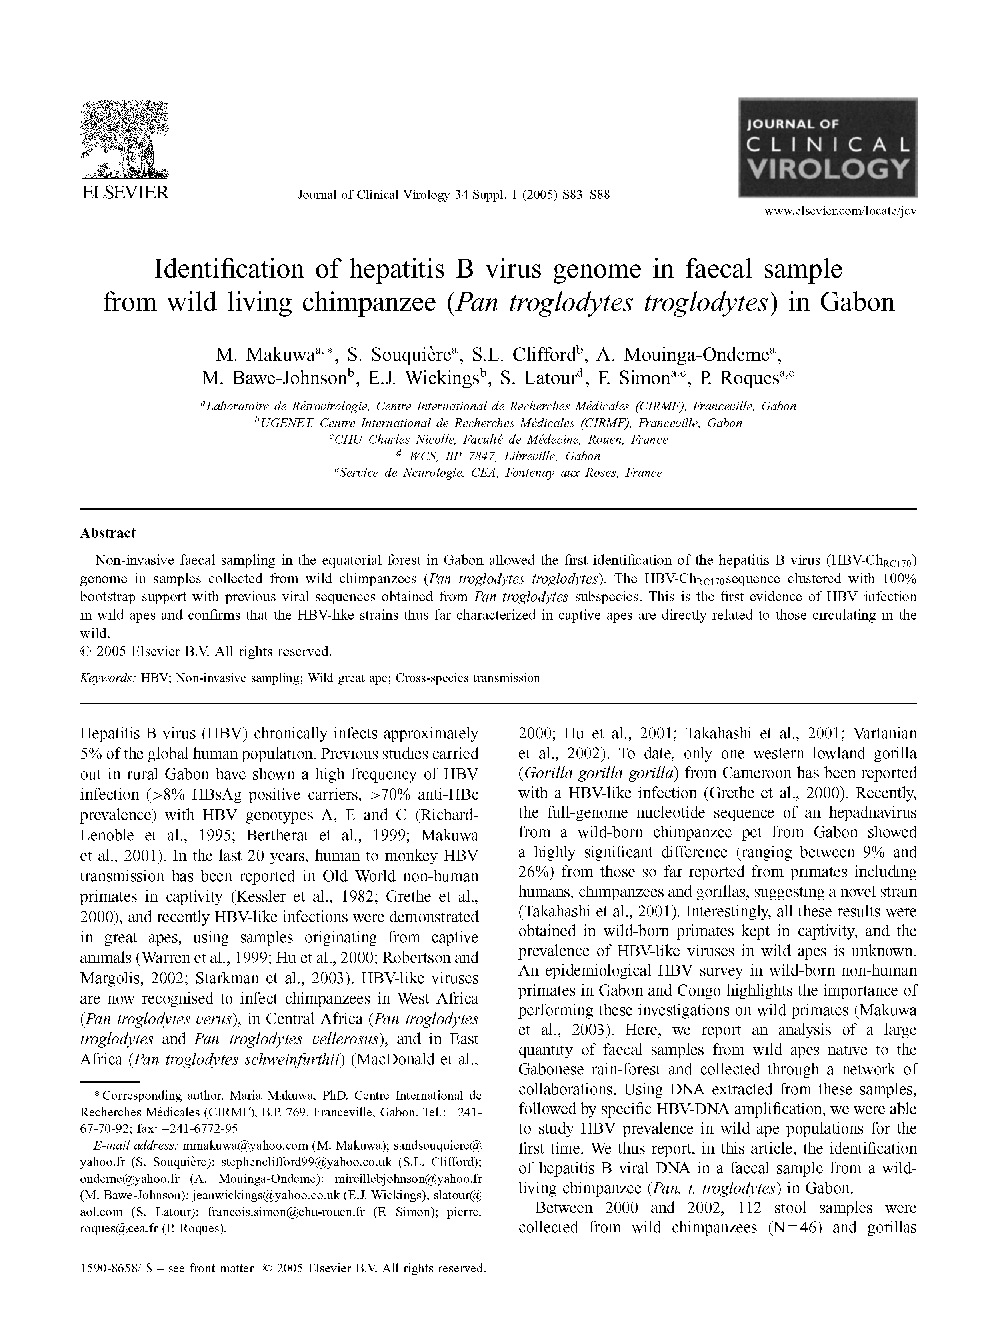 Identification of hepatitis B virus genome in faecal sample from wild living chimpanzee (Pan troglodytes troglodytes) in Gabon